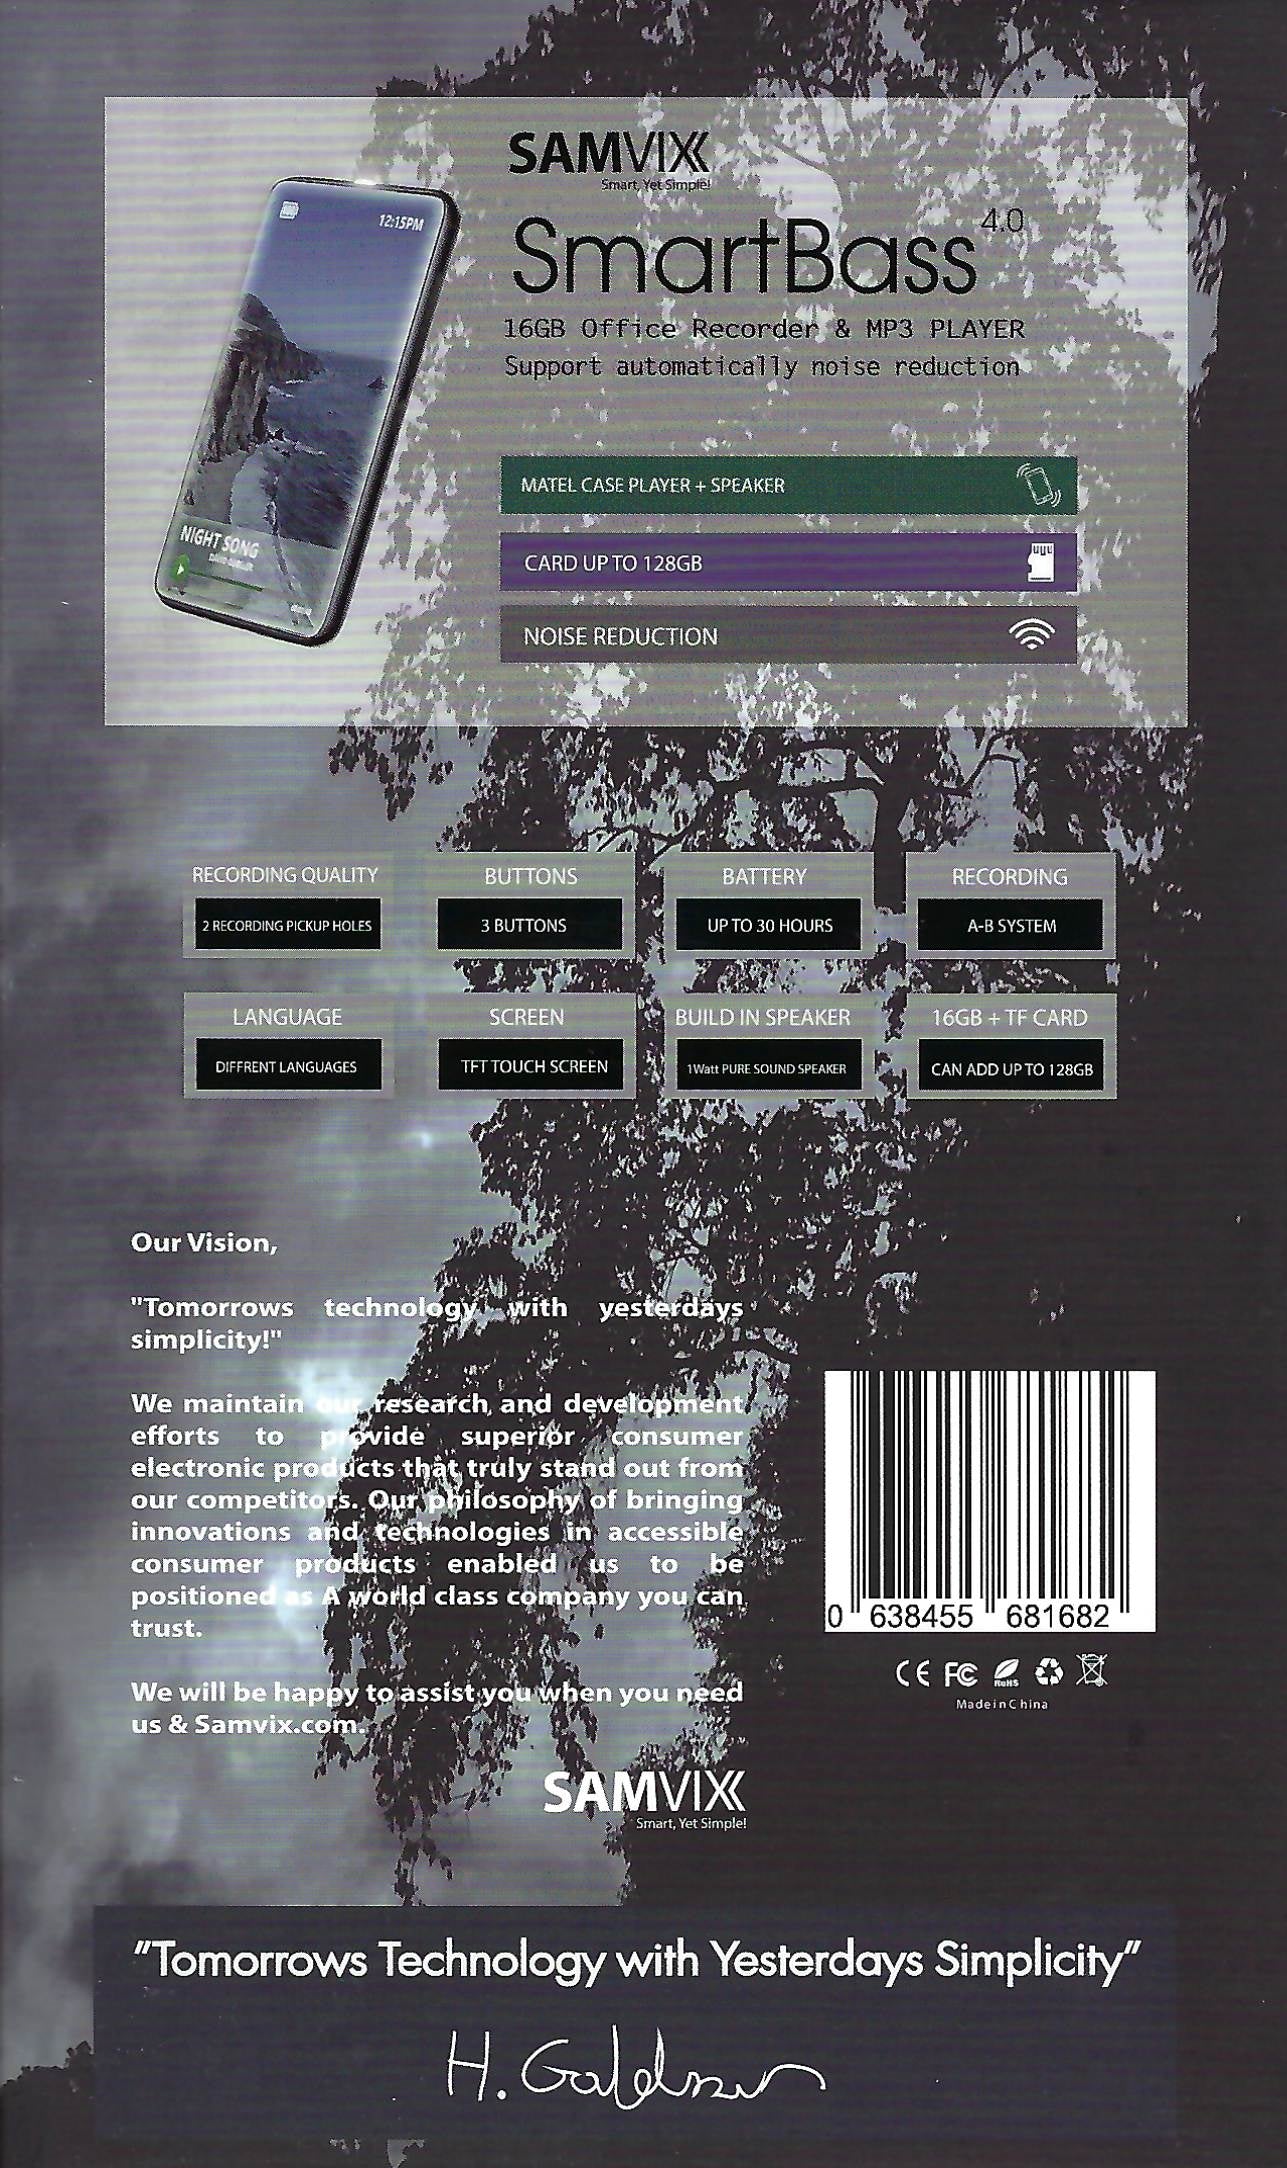 Samvix - SmartBass 4.0 MP3 Player - 16GB